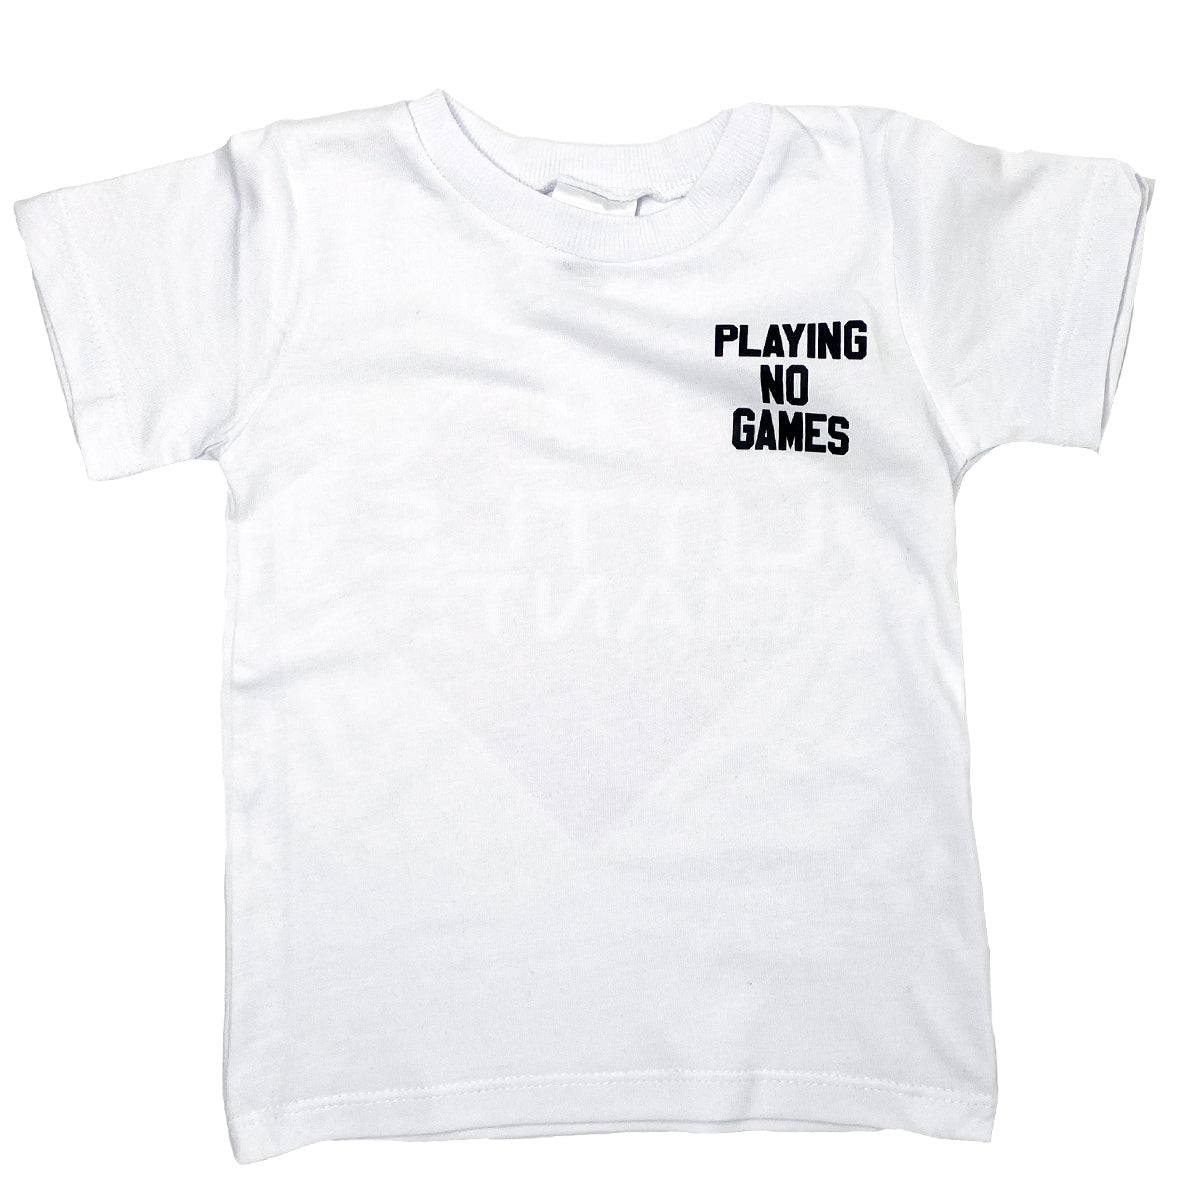 Playin' No Games T-shirt (White)